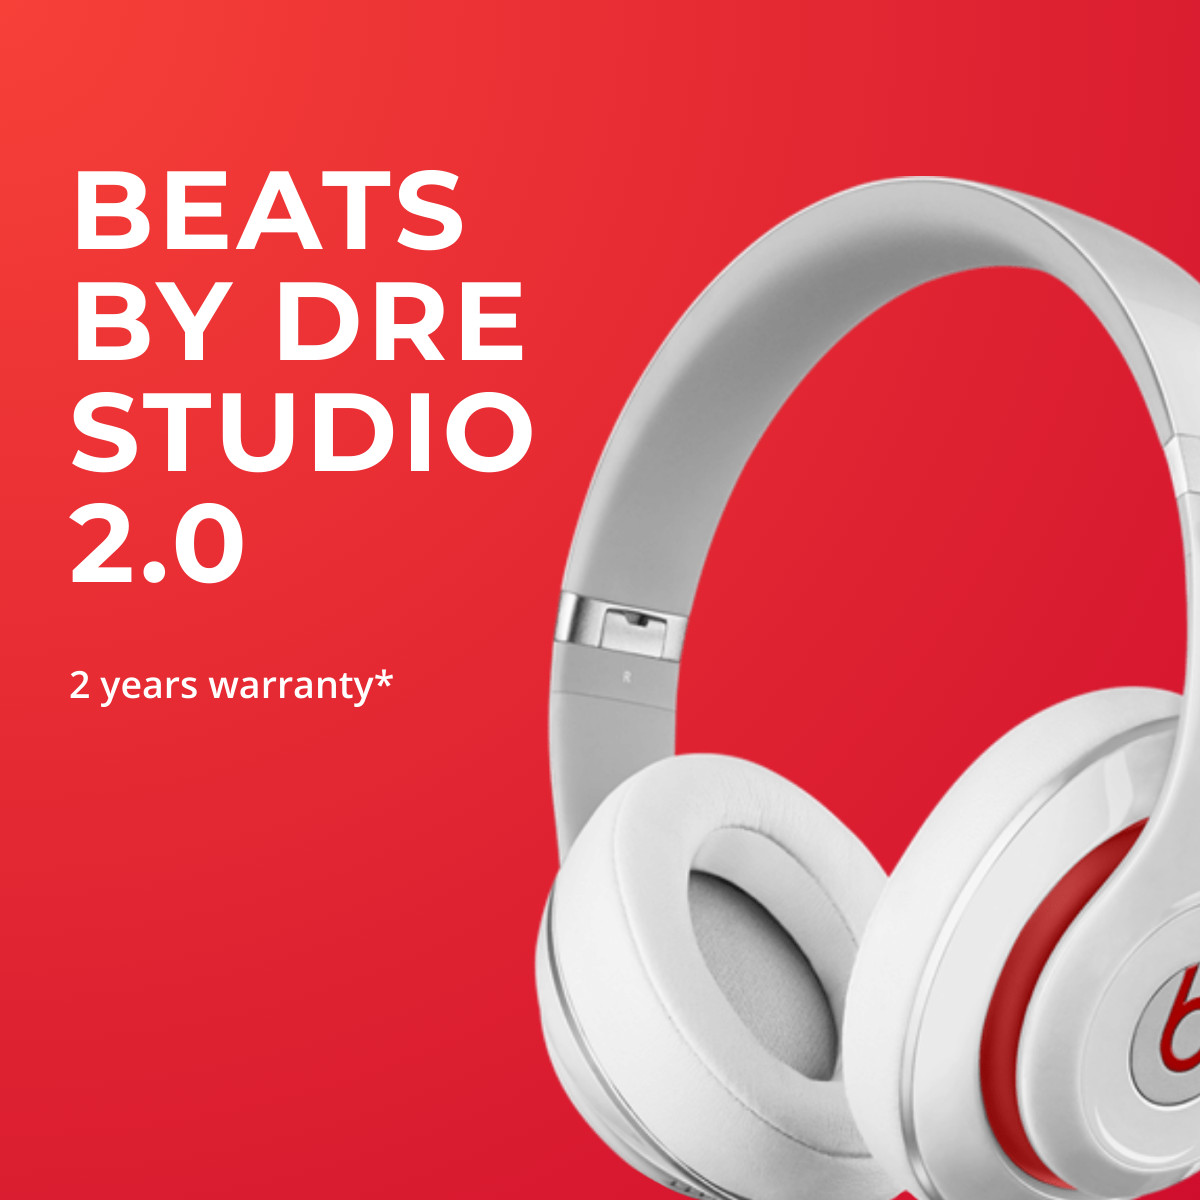 Buy Beats by Dre Headphones Inline Rectangle 300x250